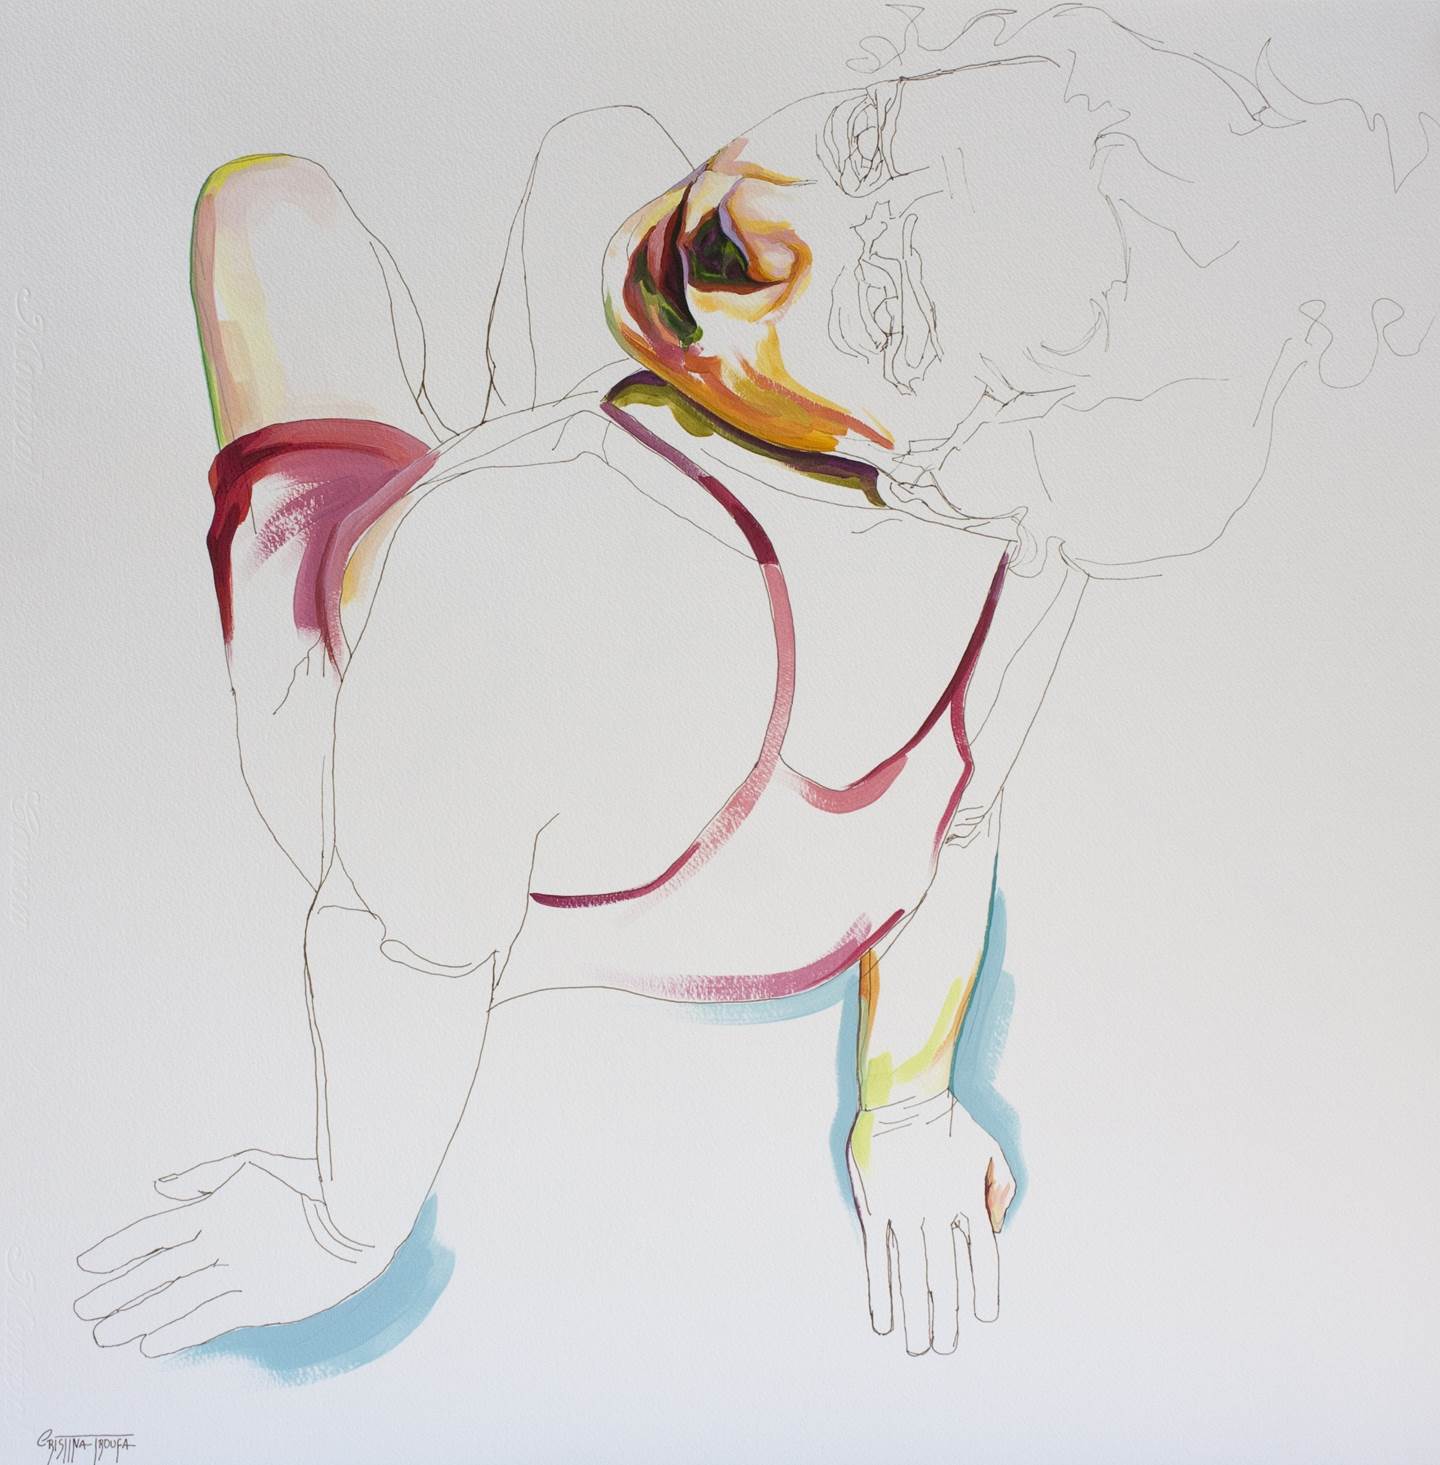 Exercício #2, original Body Acrylic Drawing and Illustration by Cristina  Troufa